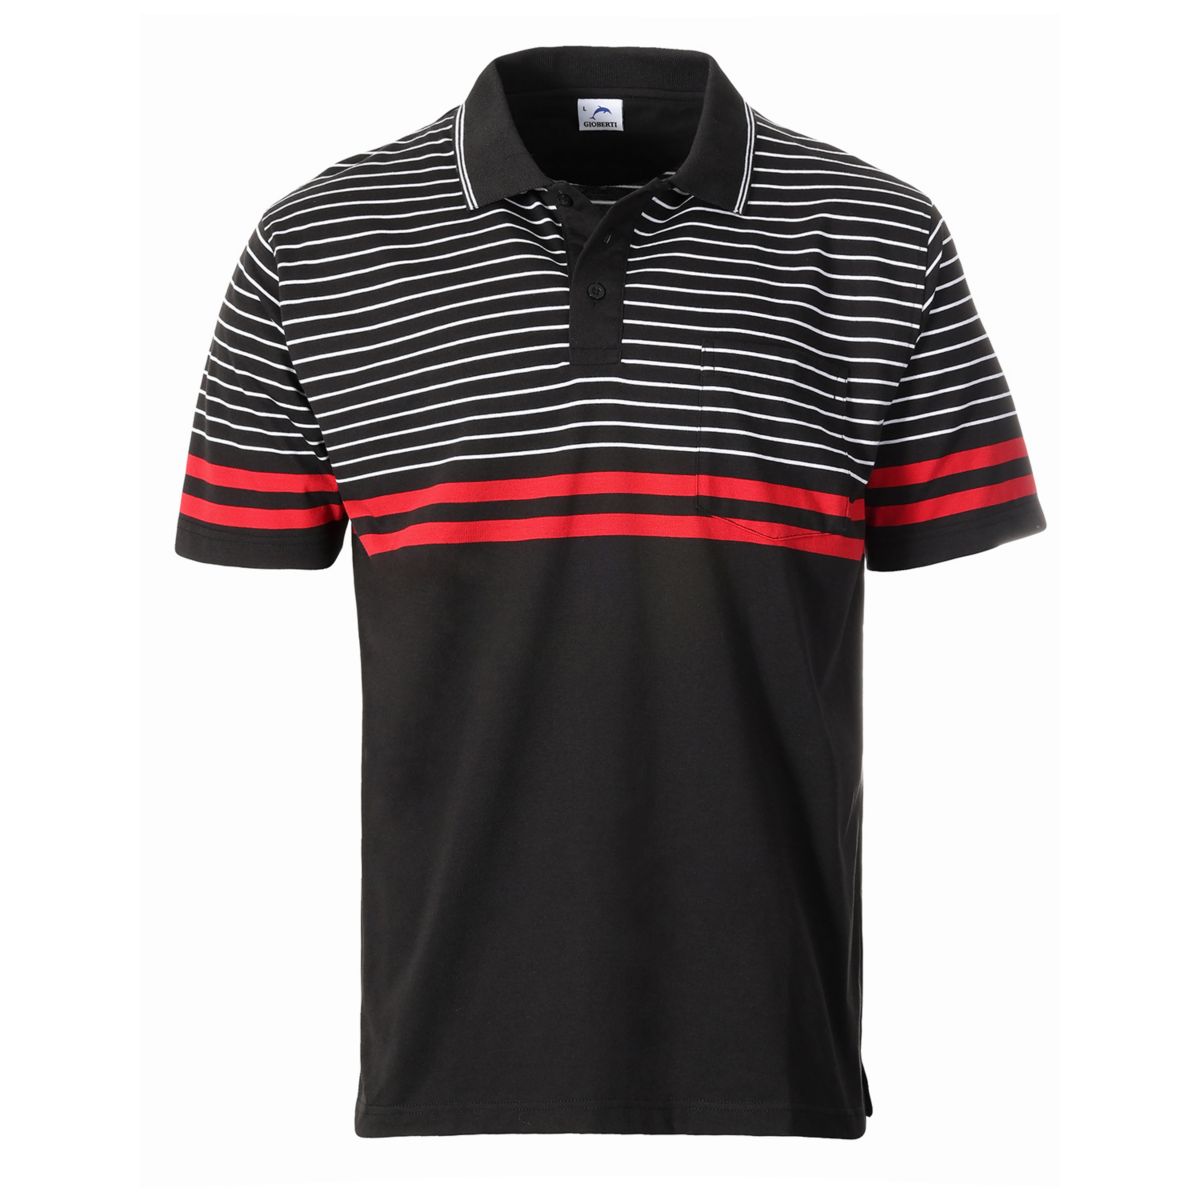 Gioberti Mens Double Striped Contrast Polo Shirt With Pocket - Yarn Dye Gioberti